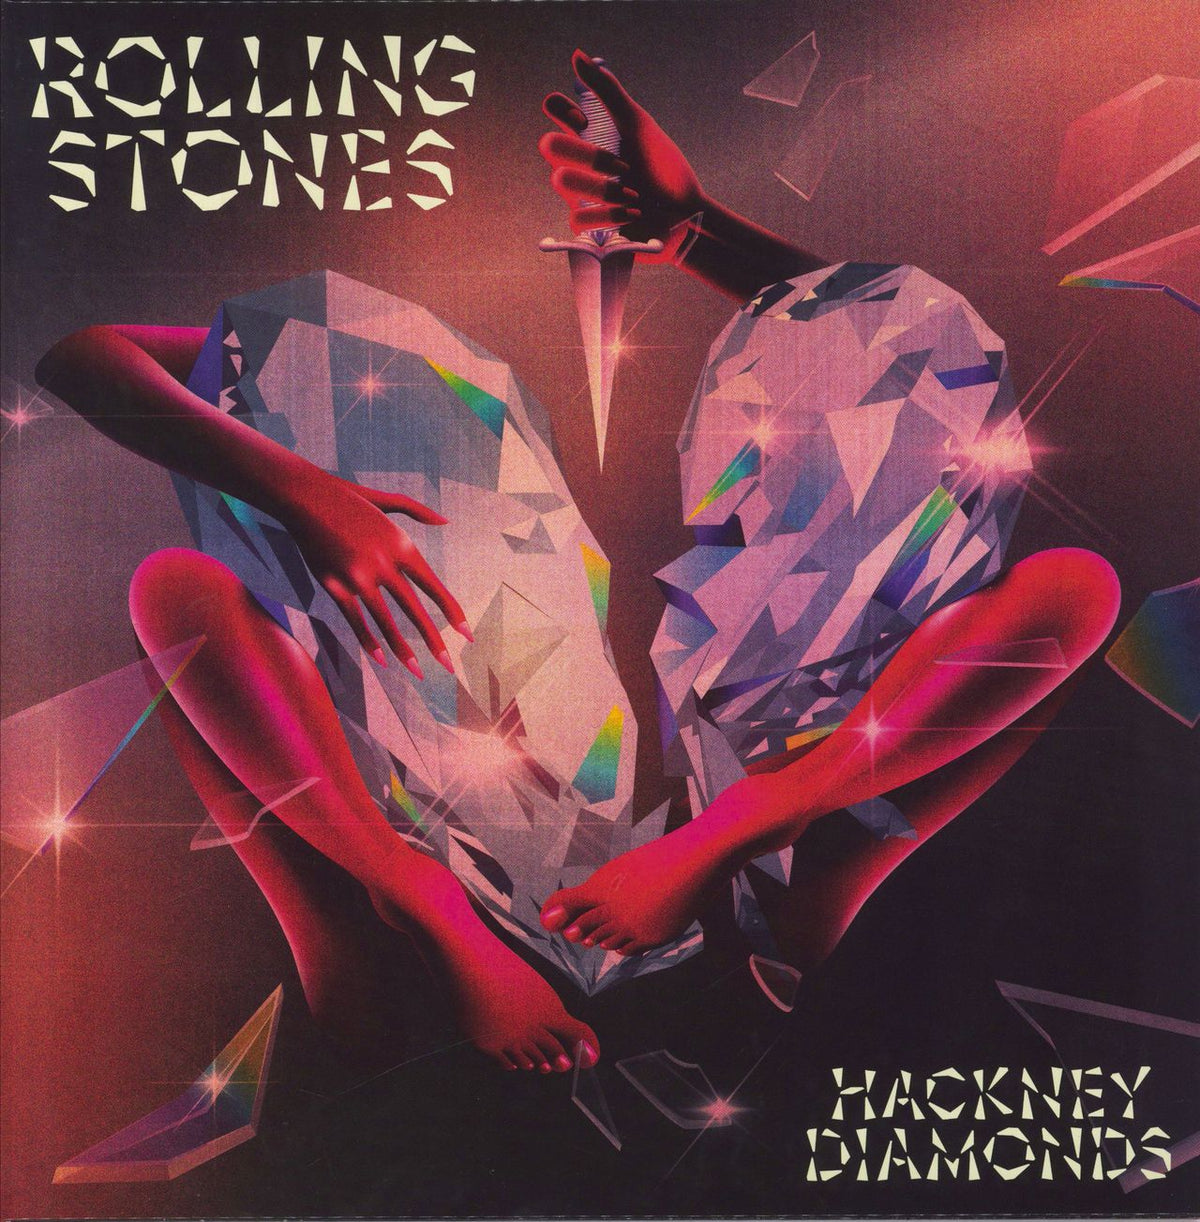 The Rolling Stones Hackney Diamonds - Green Vinyl Alternate 